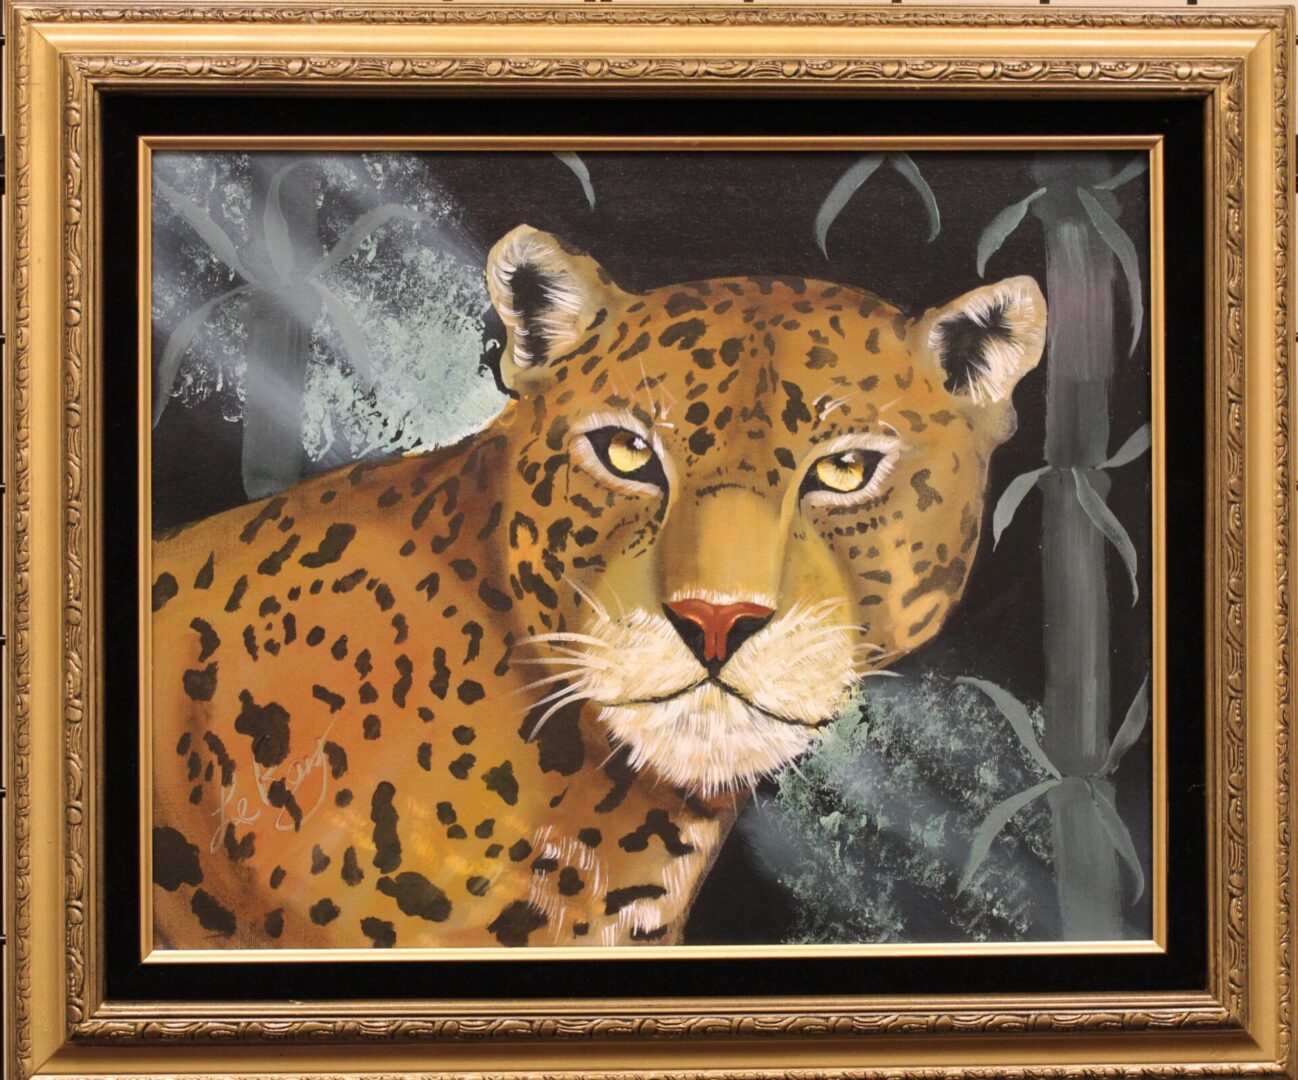 A framed painting of a jaguar